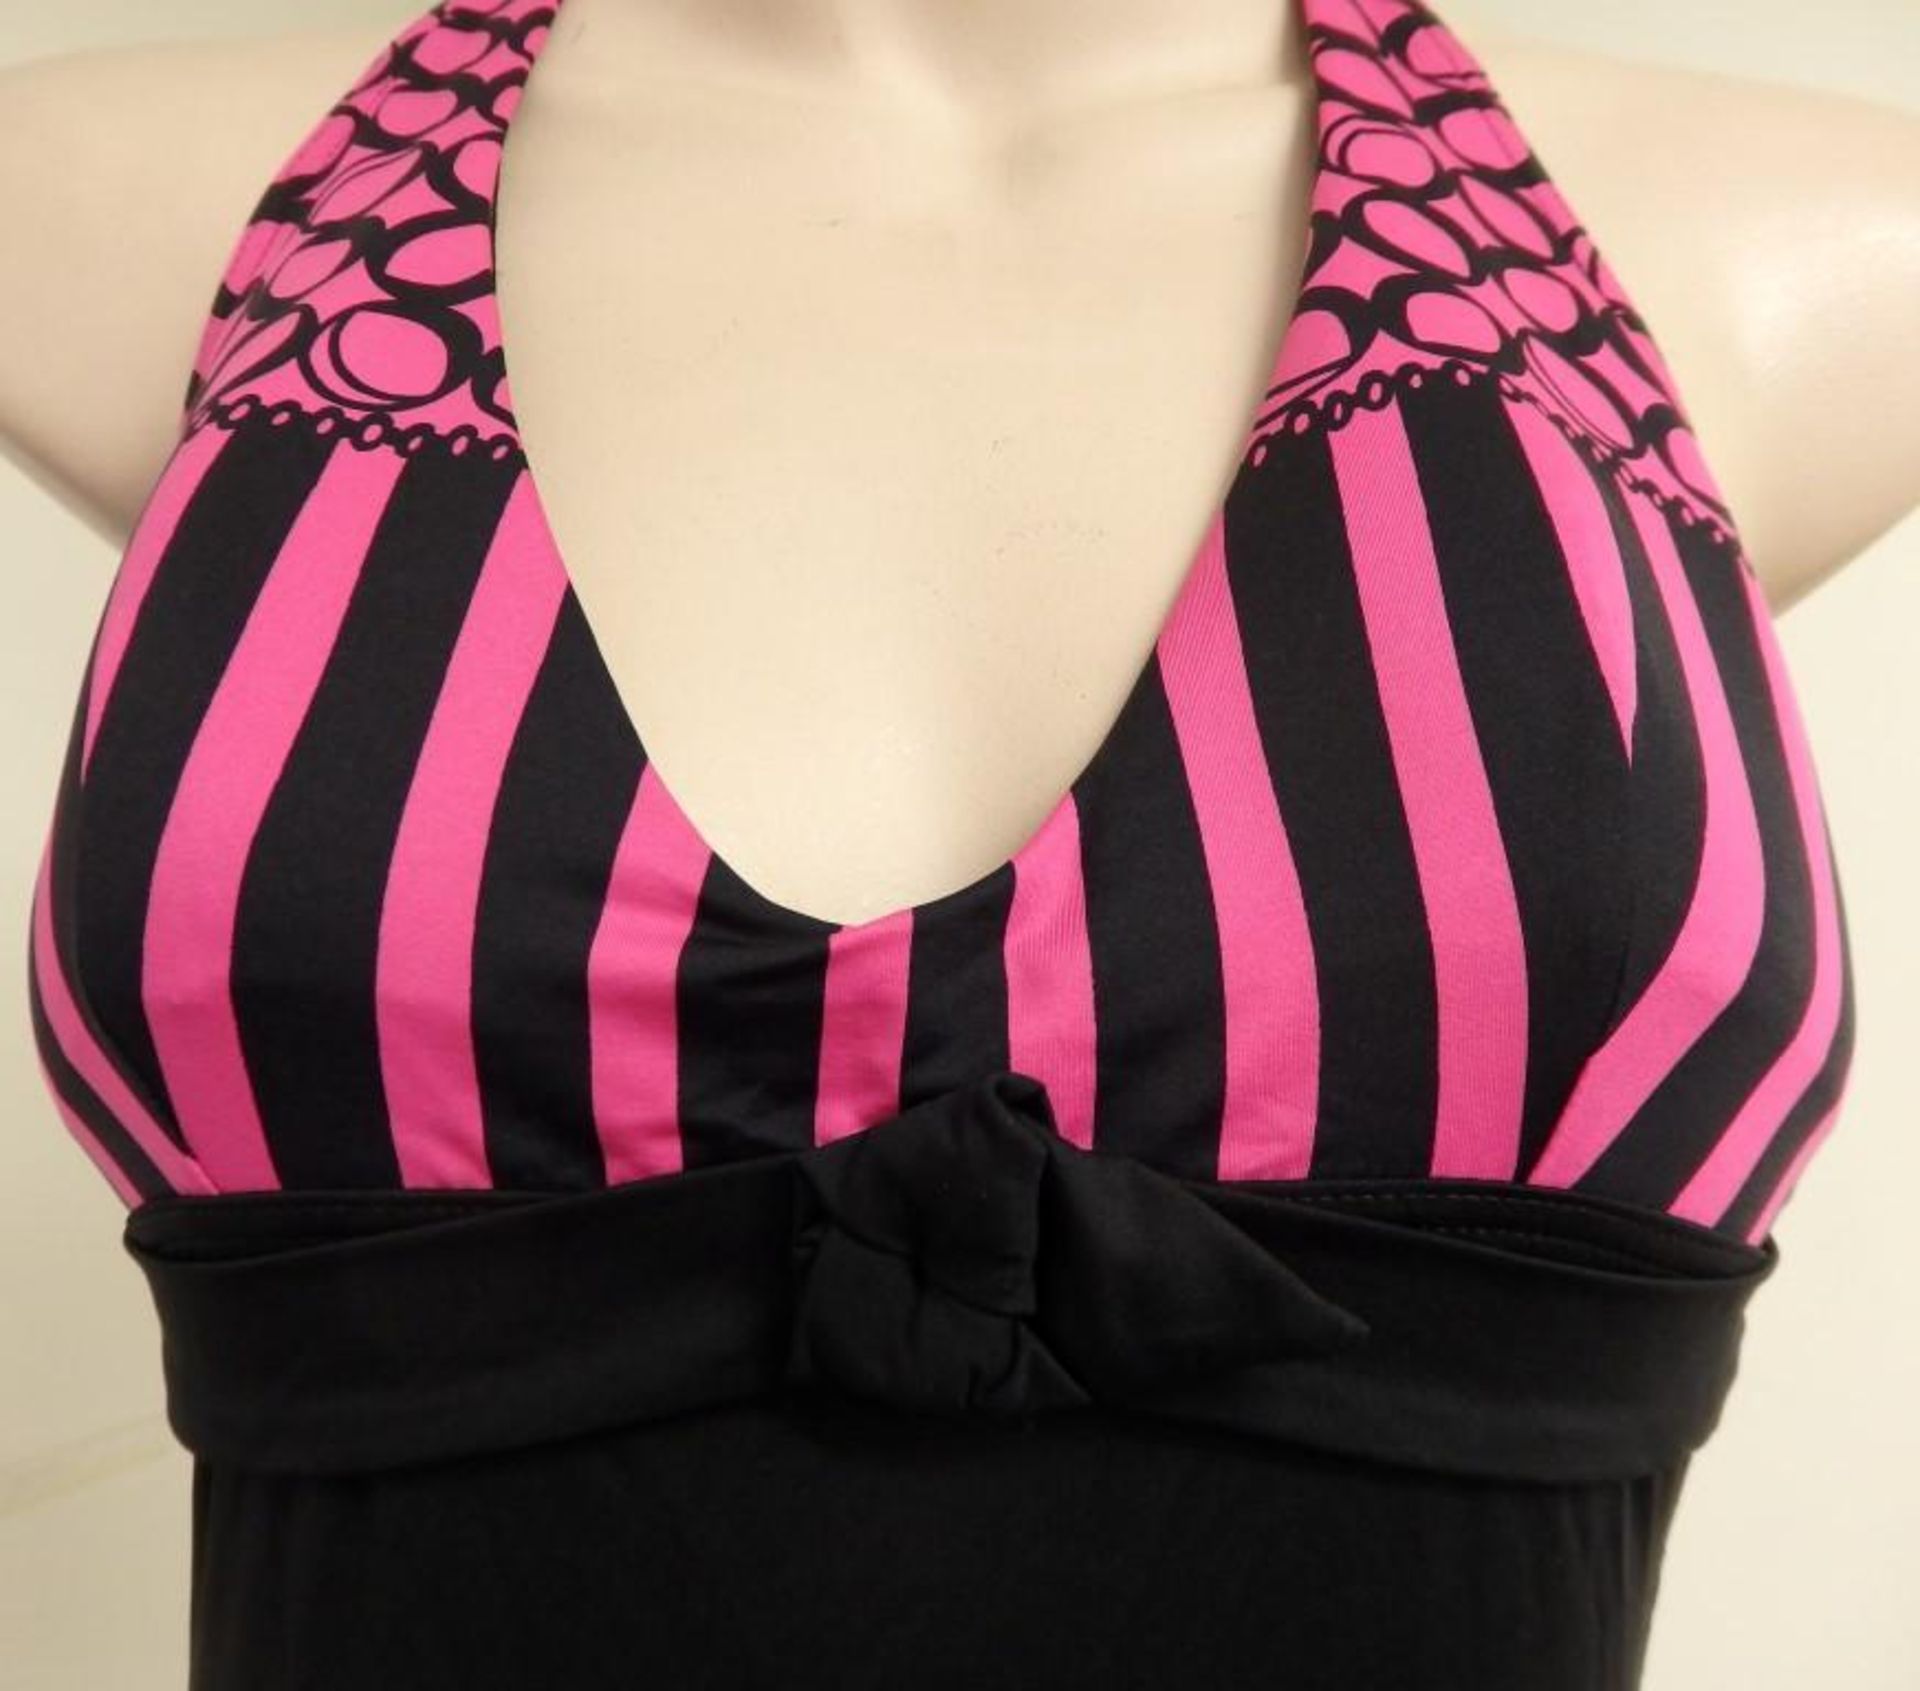 1 x Rasurel - Black/Pink patterned - Borneo Swimsuit - R20434 - Size 2C - UK 32 - Fr 85 - EU/Int 70 - Image 3 of 7